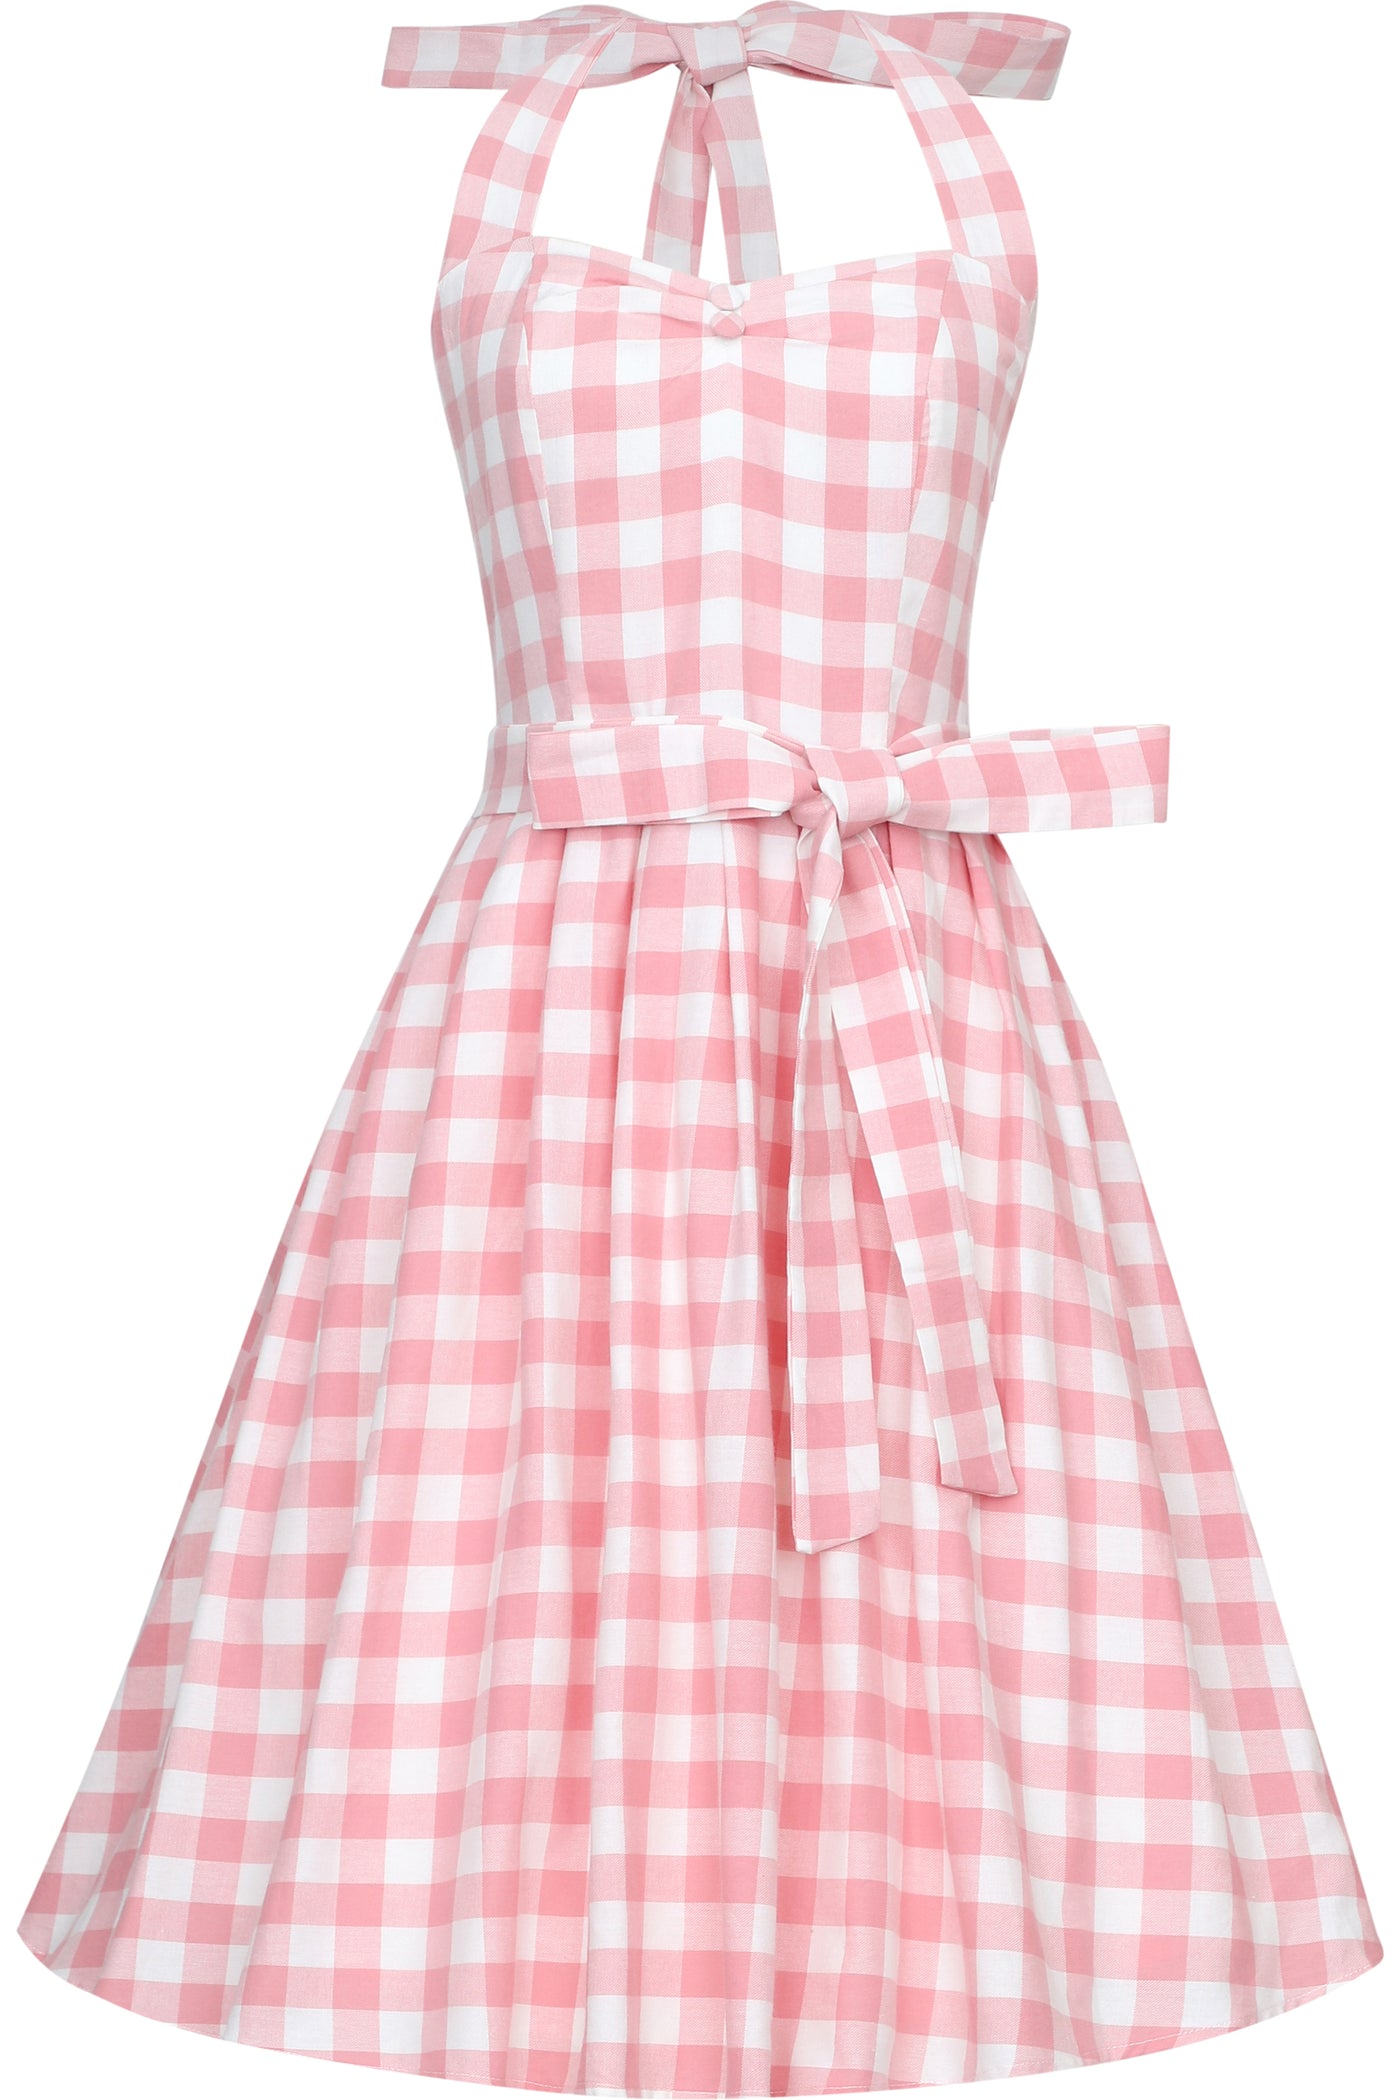 Sophia Rockabilly Halterneck Pink Gingham Swing Dress